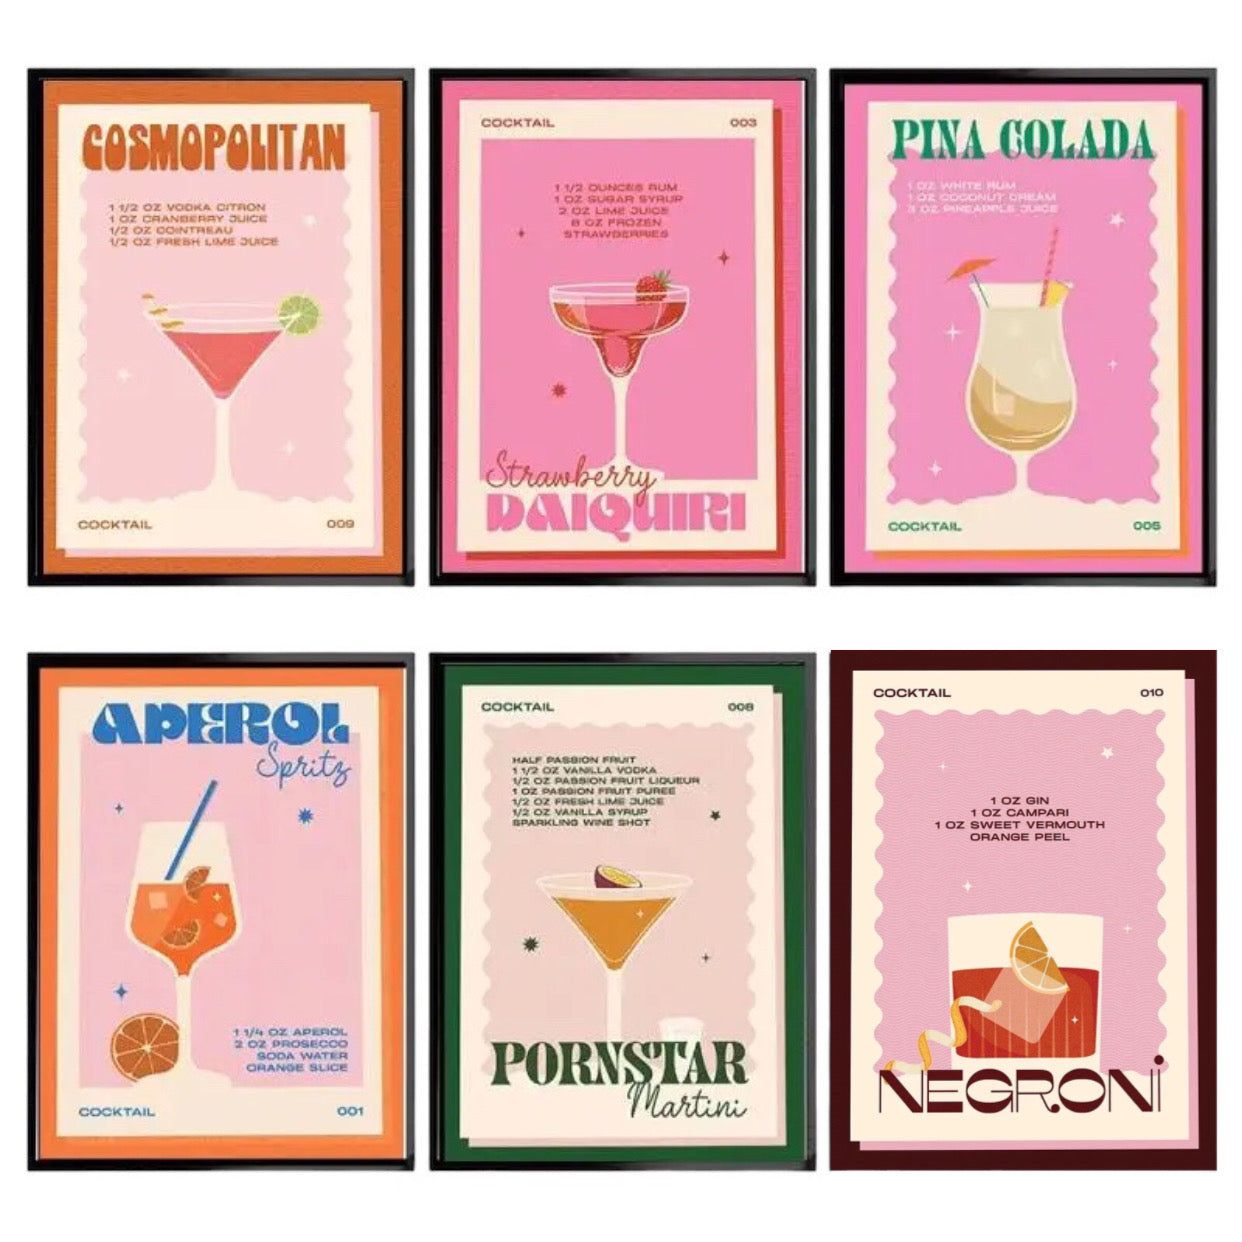 pornstar martini poster